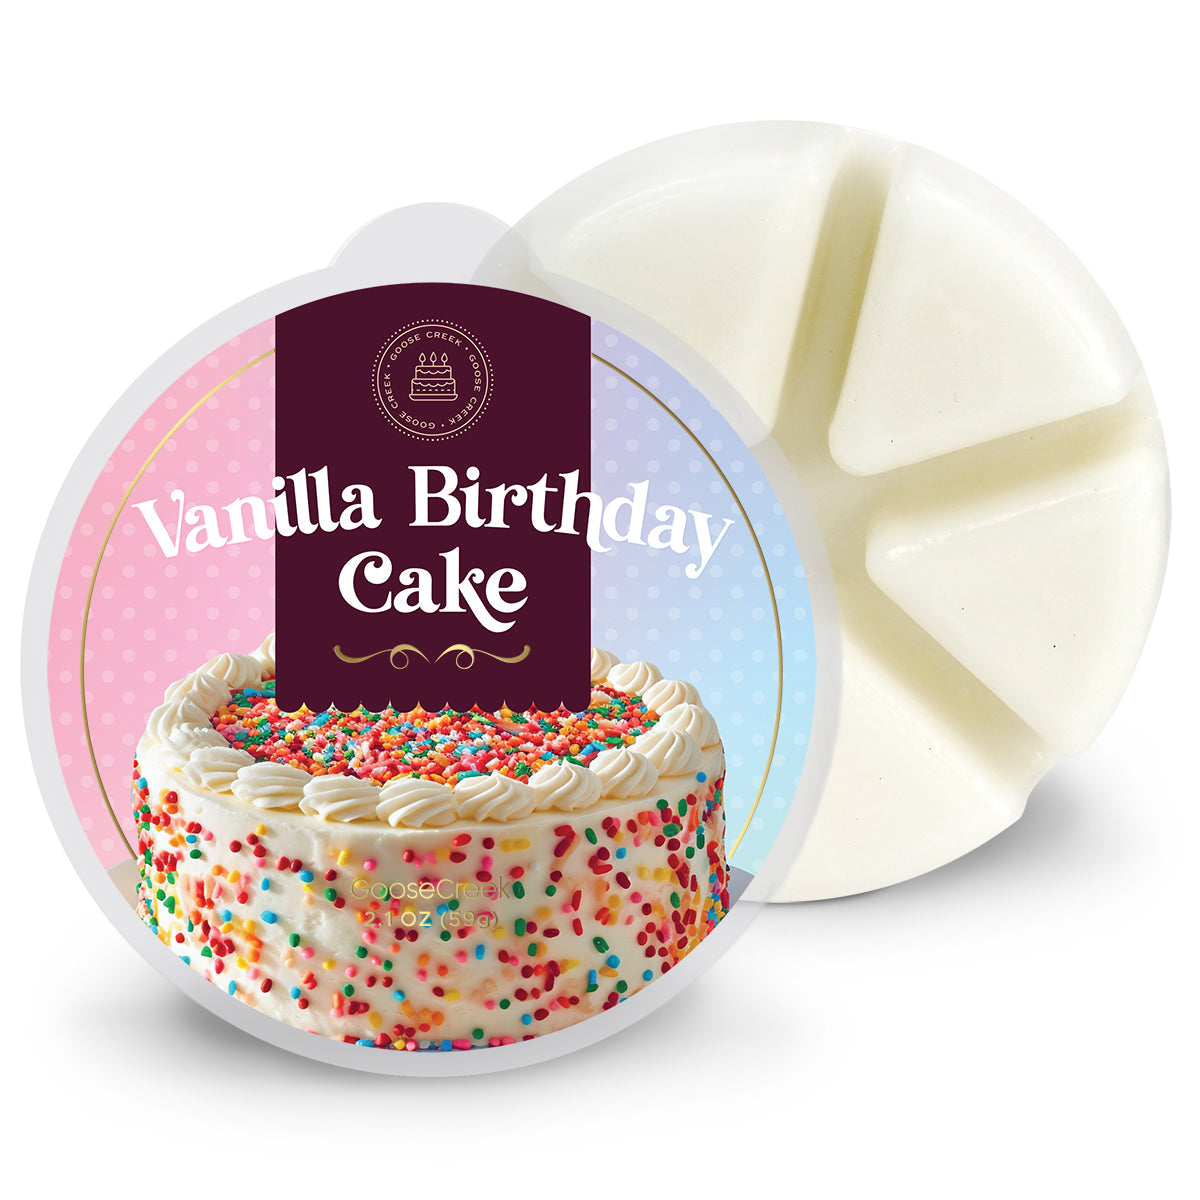 Vanilla Birthday Cake Wax Melt Fragrance - Indulgent Homemade Scent